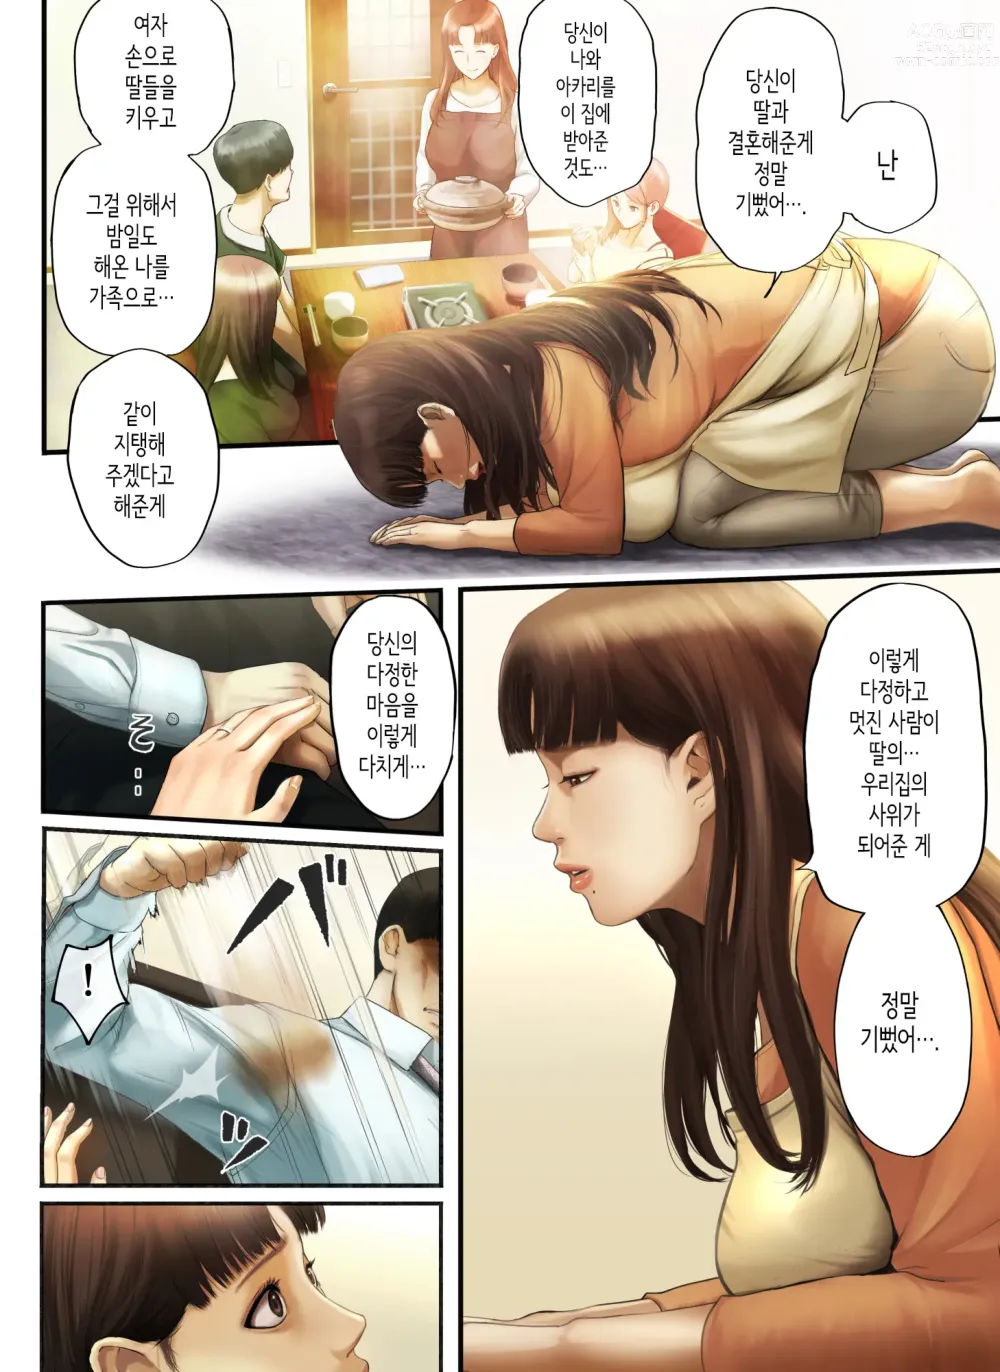 Page 11 of doujinshi 「착하기만 한 남자」라며 아내에게 버림받아서...